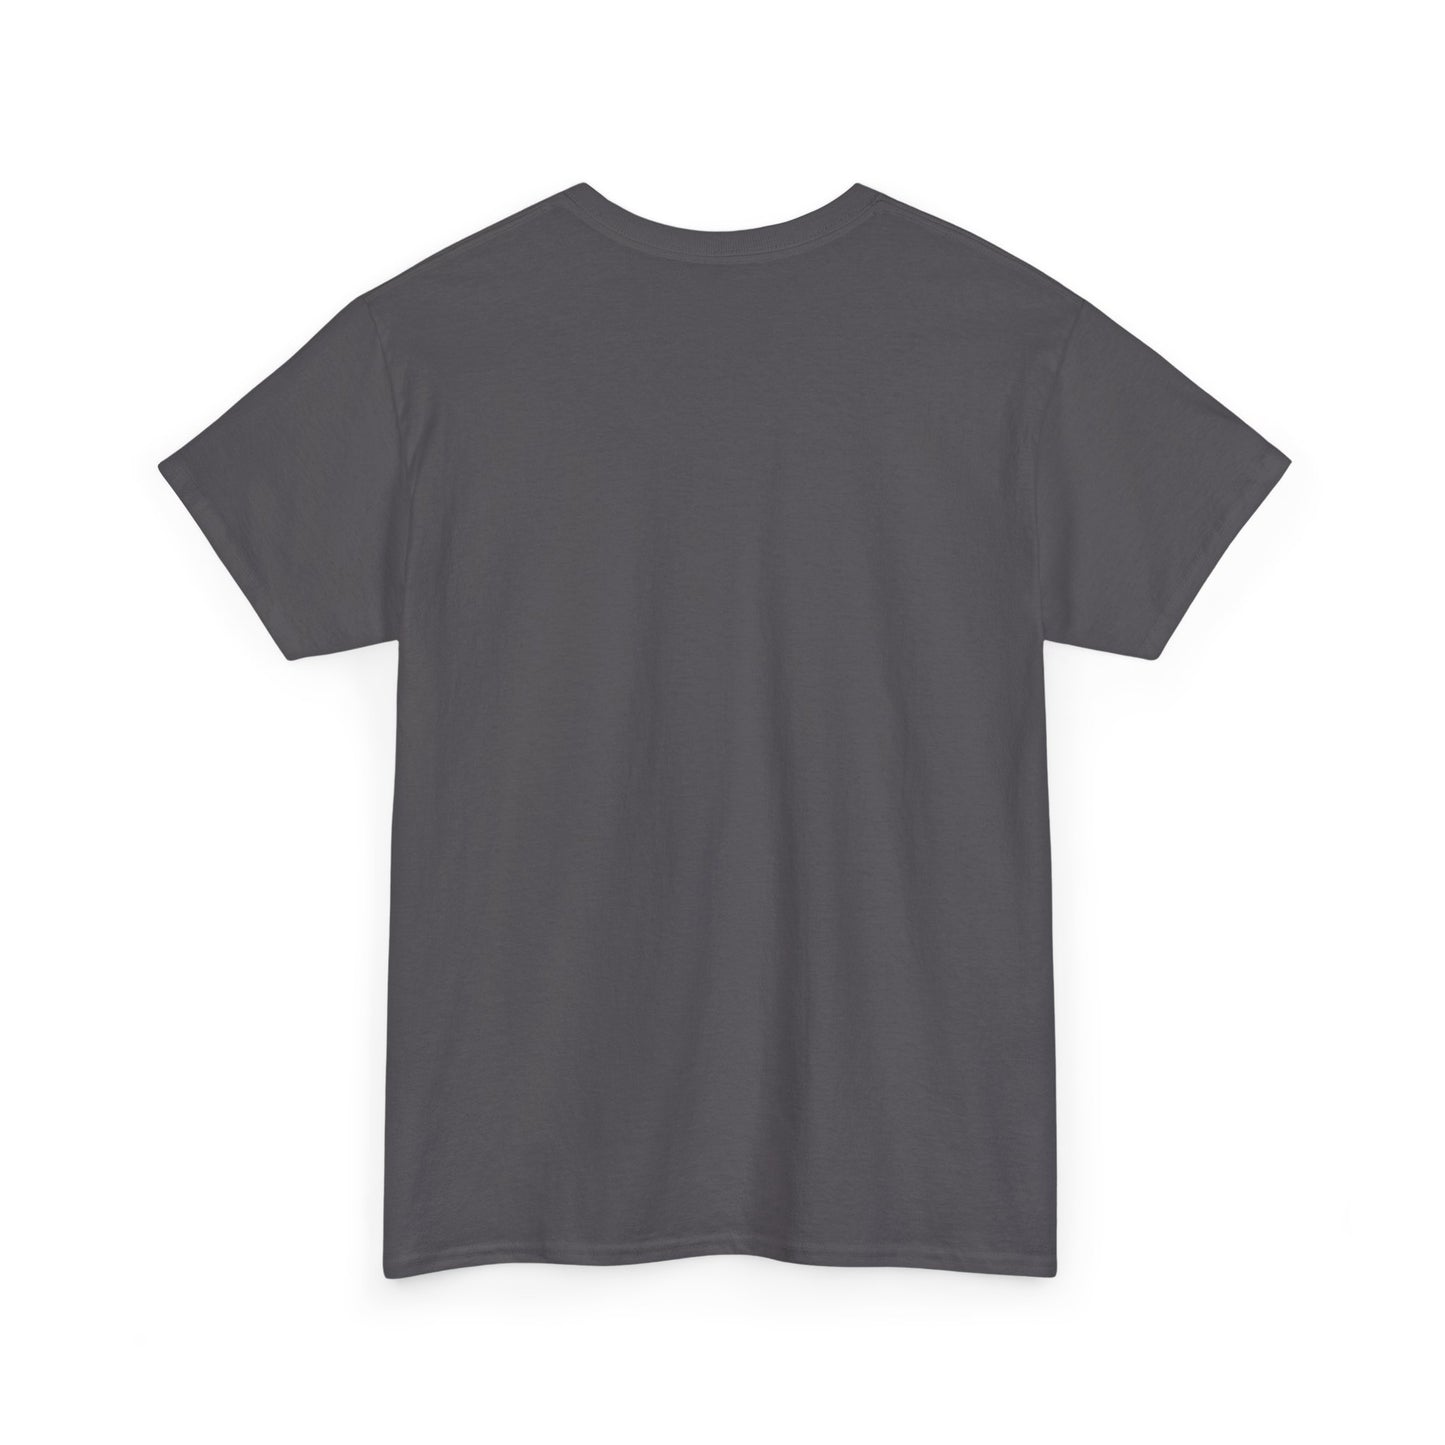 Multiplanetary T-Shirt, Astronaut T-Shirt, Gaming Tee 100% Cotton, 4 Colours, AUS - USA warehouse, free post.